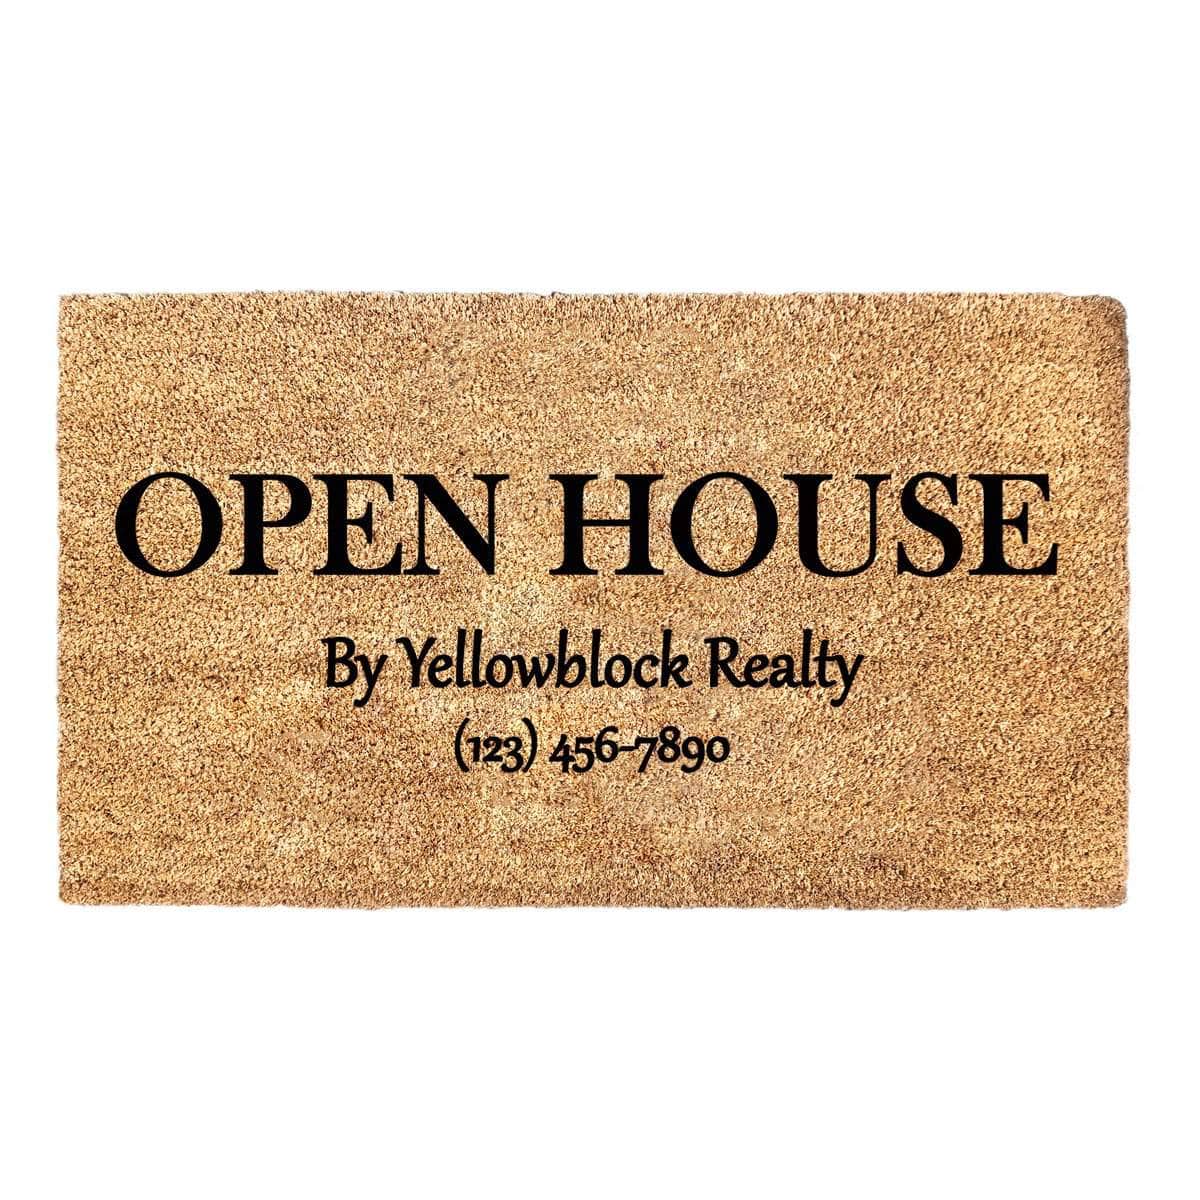 Open House With Contact Details - Realtor Doormat